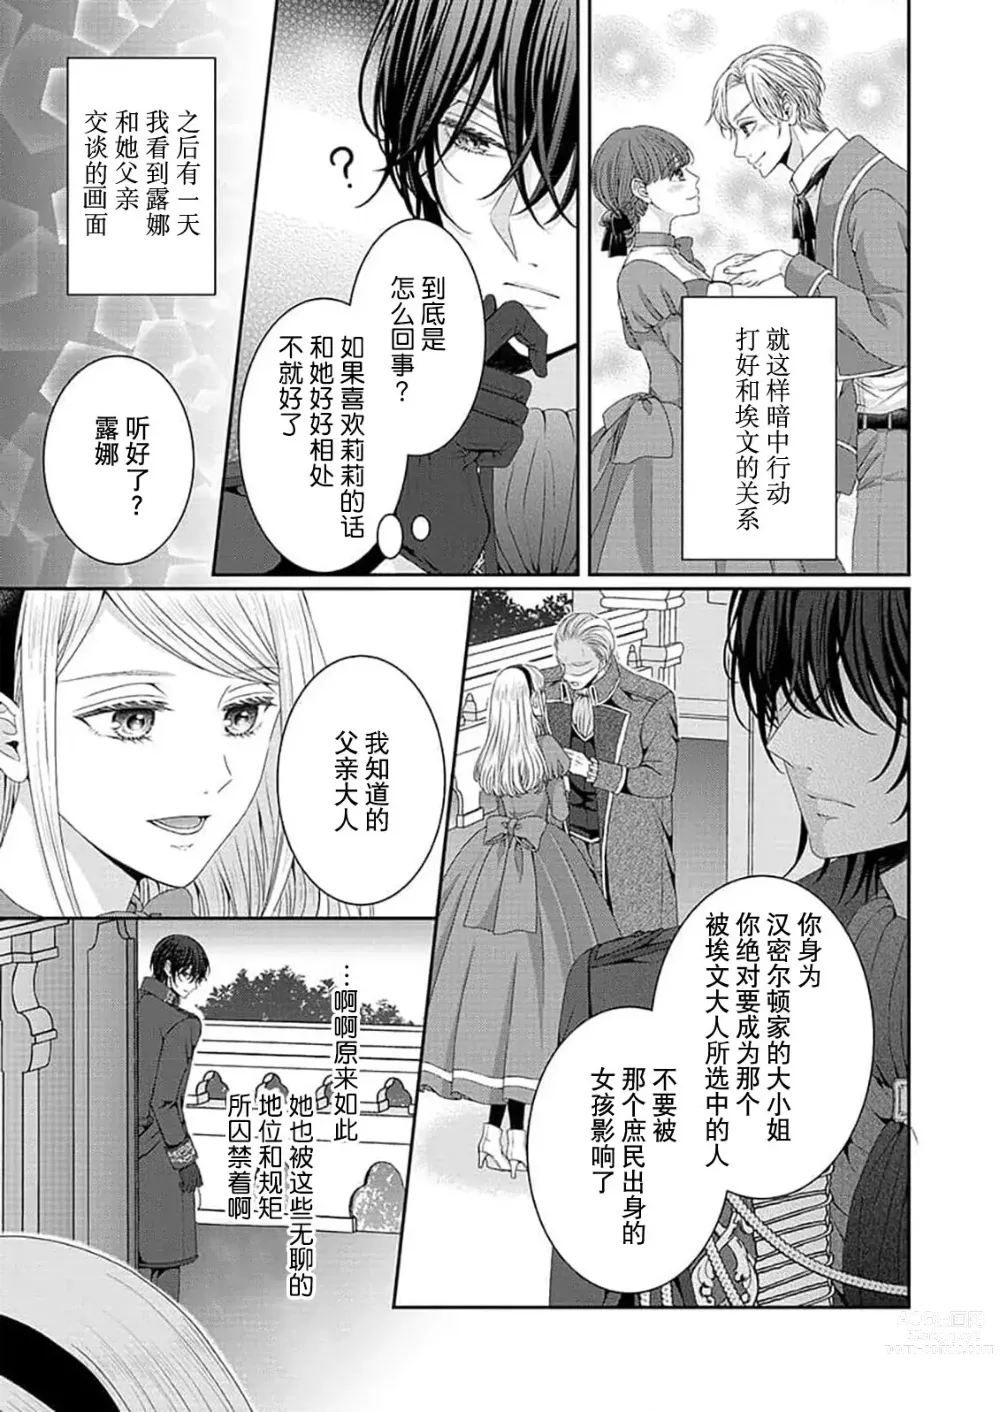 Page 21 of manga 然后你会自投罗网~冷酷王子甜蜜狡猾的陷阱